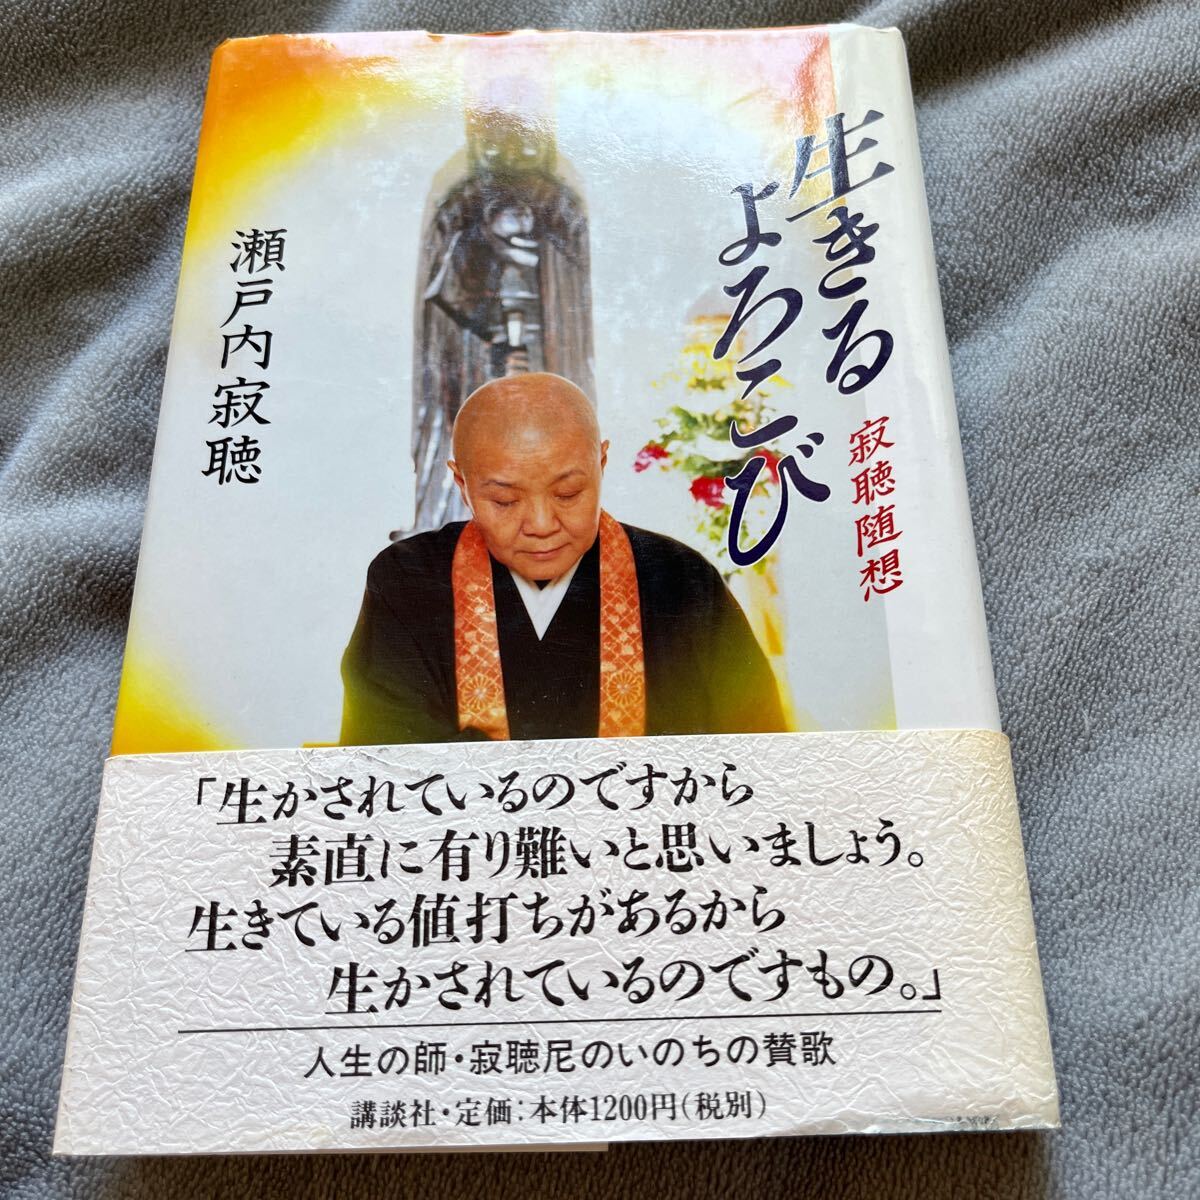 [ signature book@/..] Setouchi Jakucho [ raw ..........].. company obi attaching autograph book